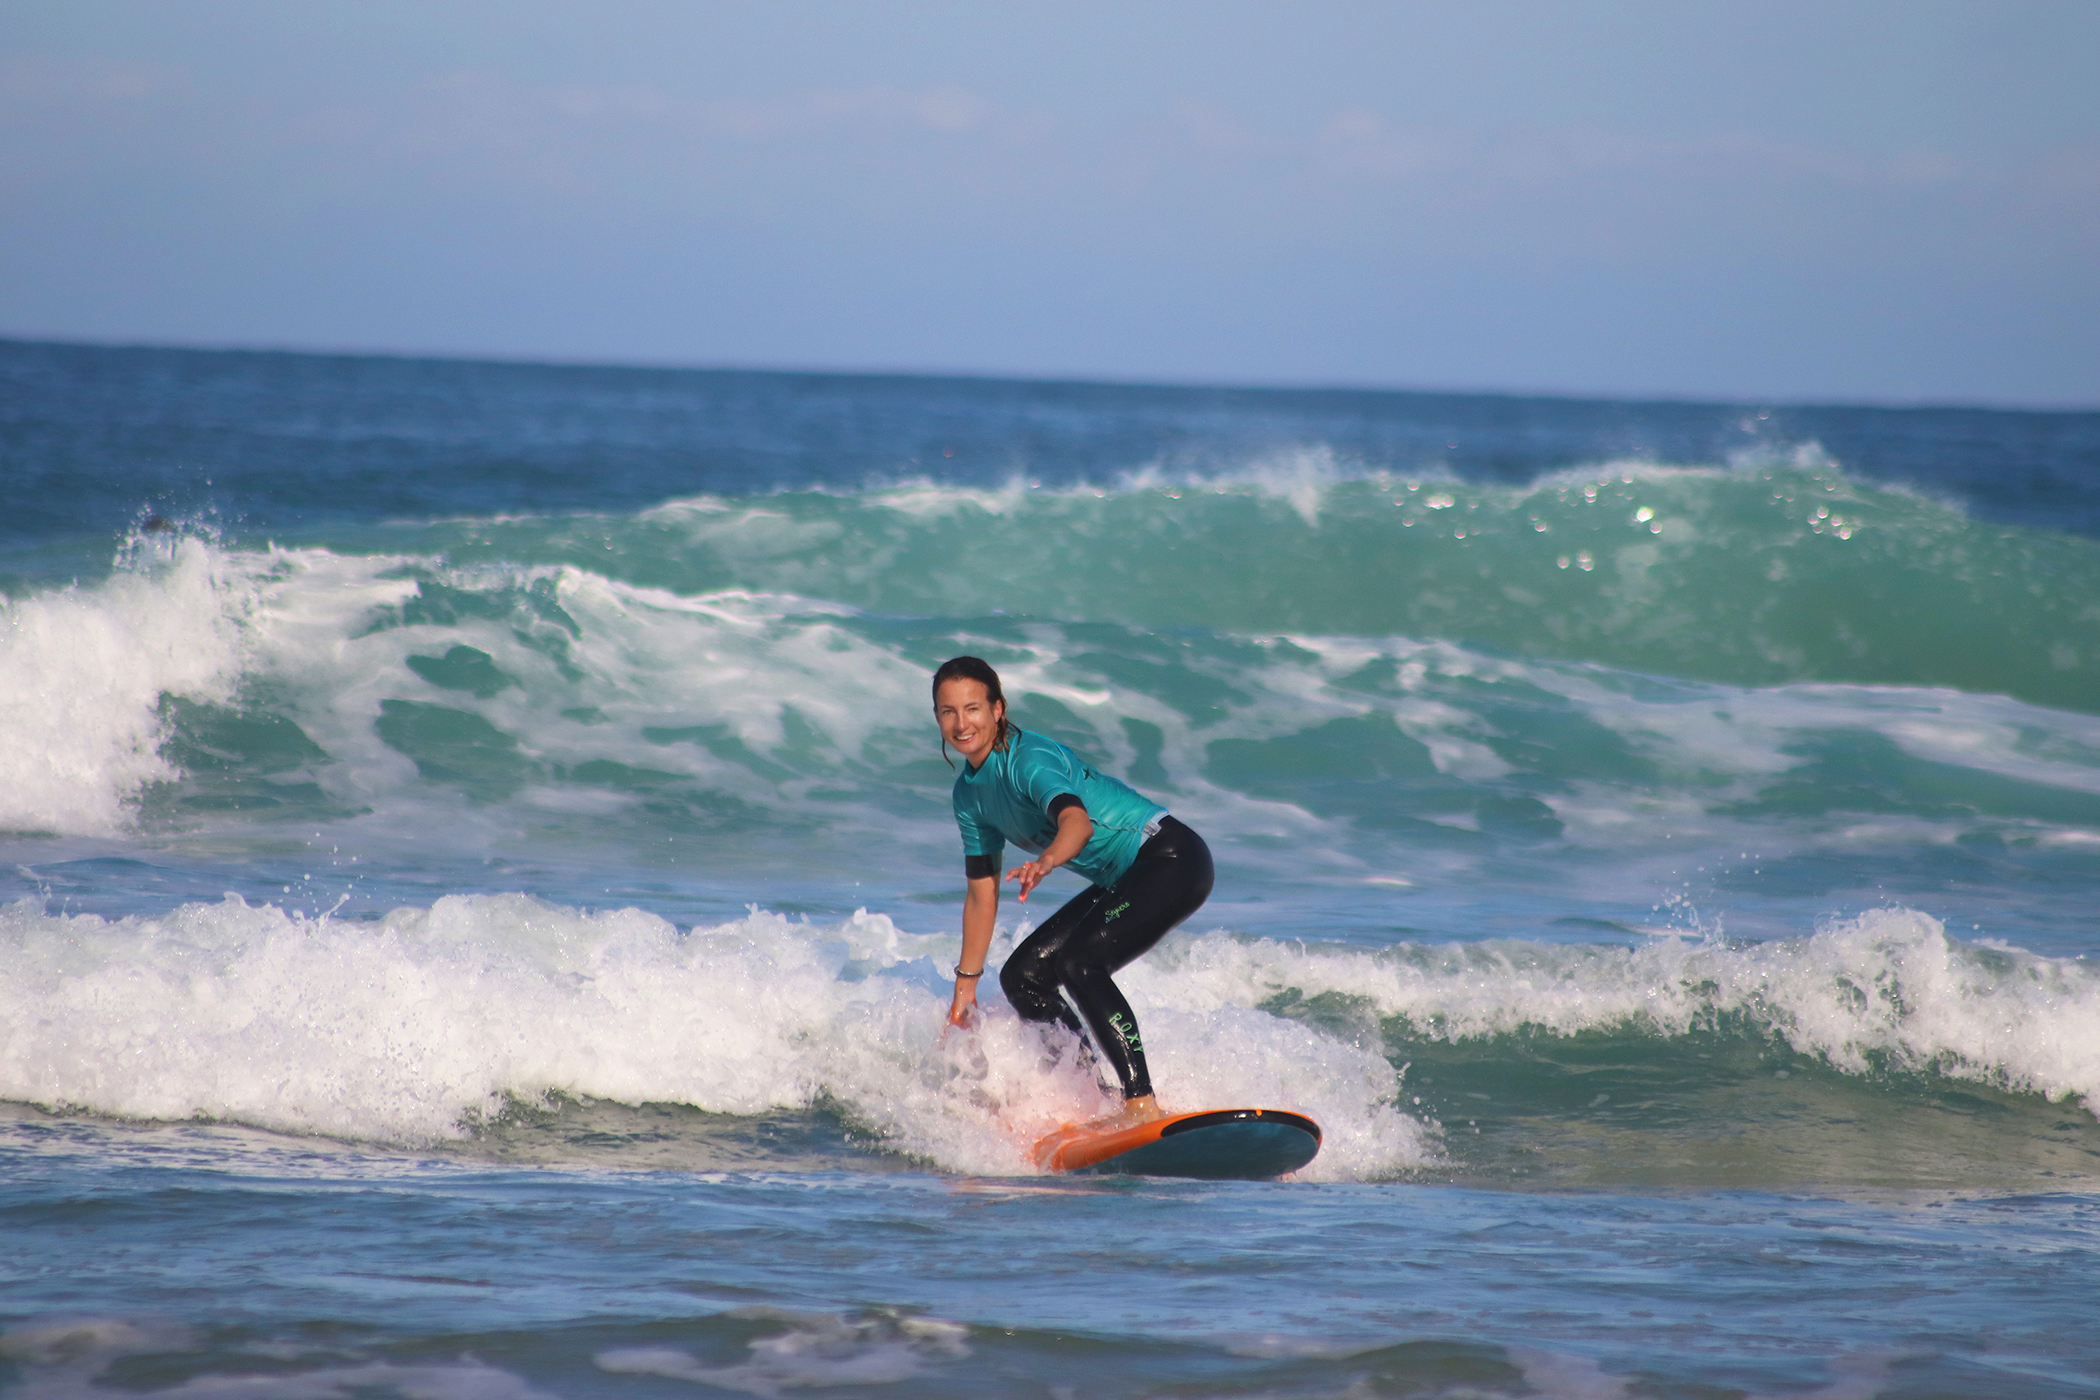 Euphoric Threads X Women + Waves Newquay surf coaching weekend